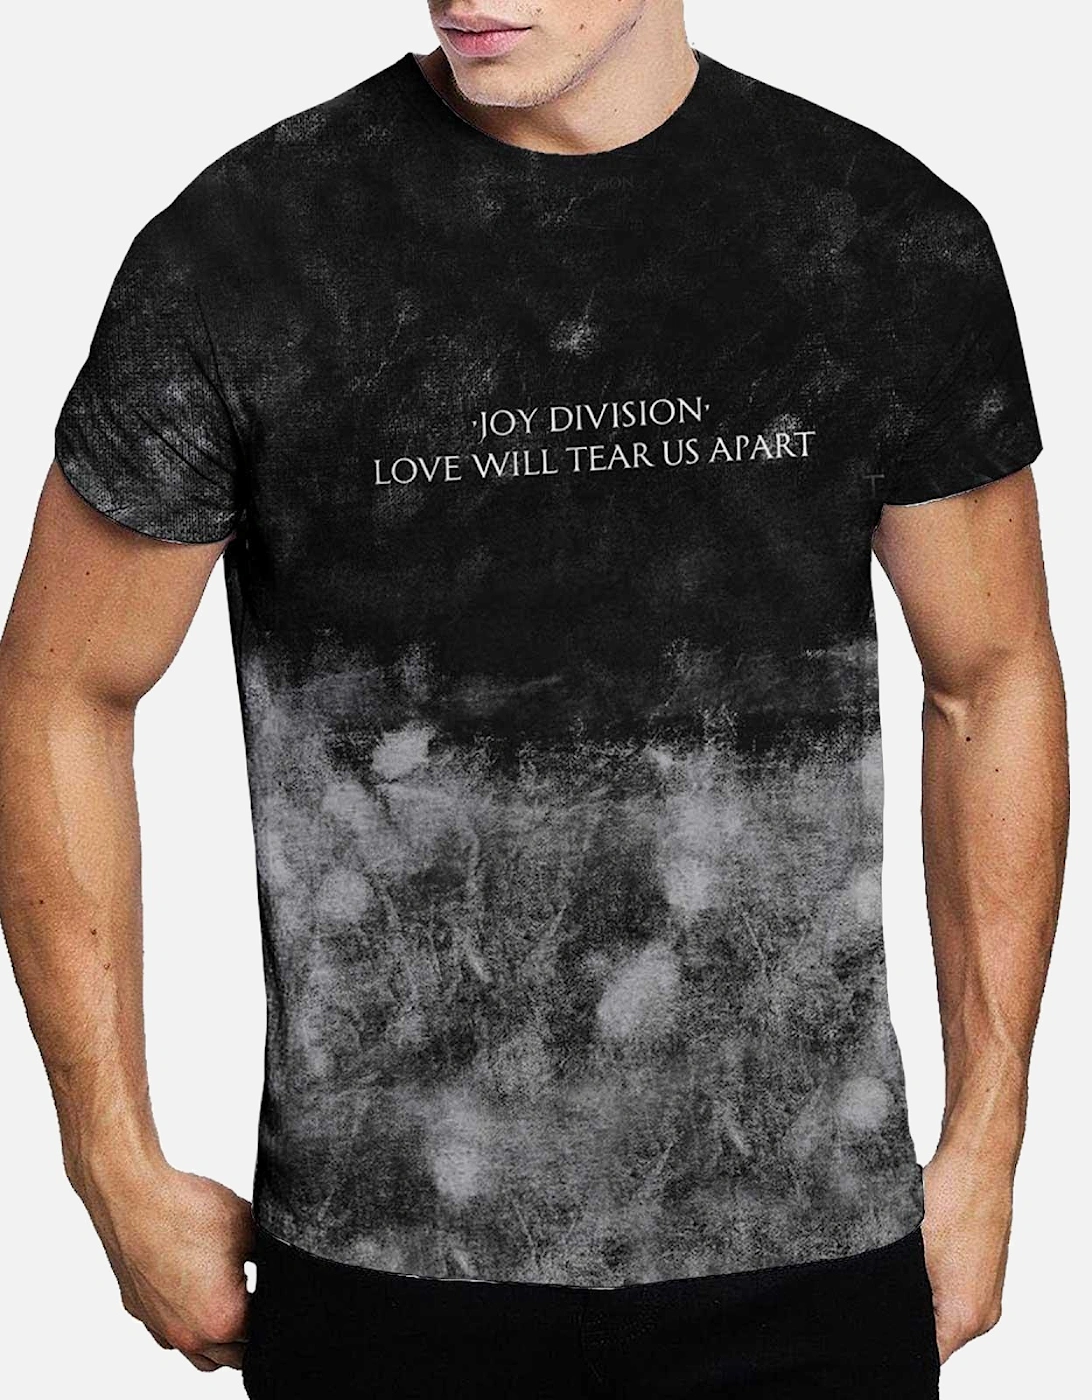 Unisex Adult Love Will Tear Us Apart Tie Dye T-Shirt